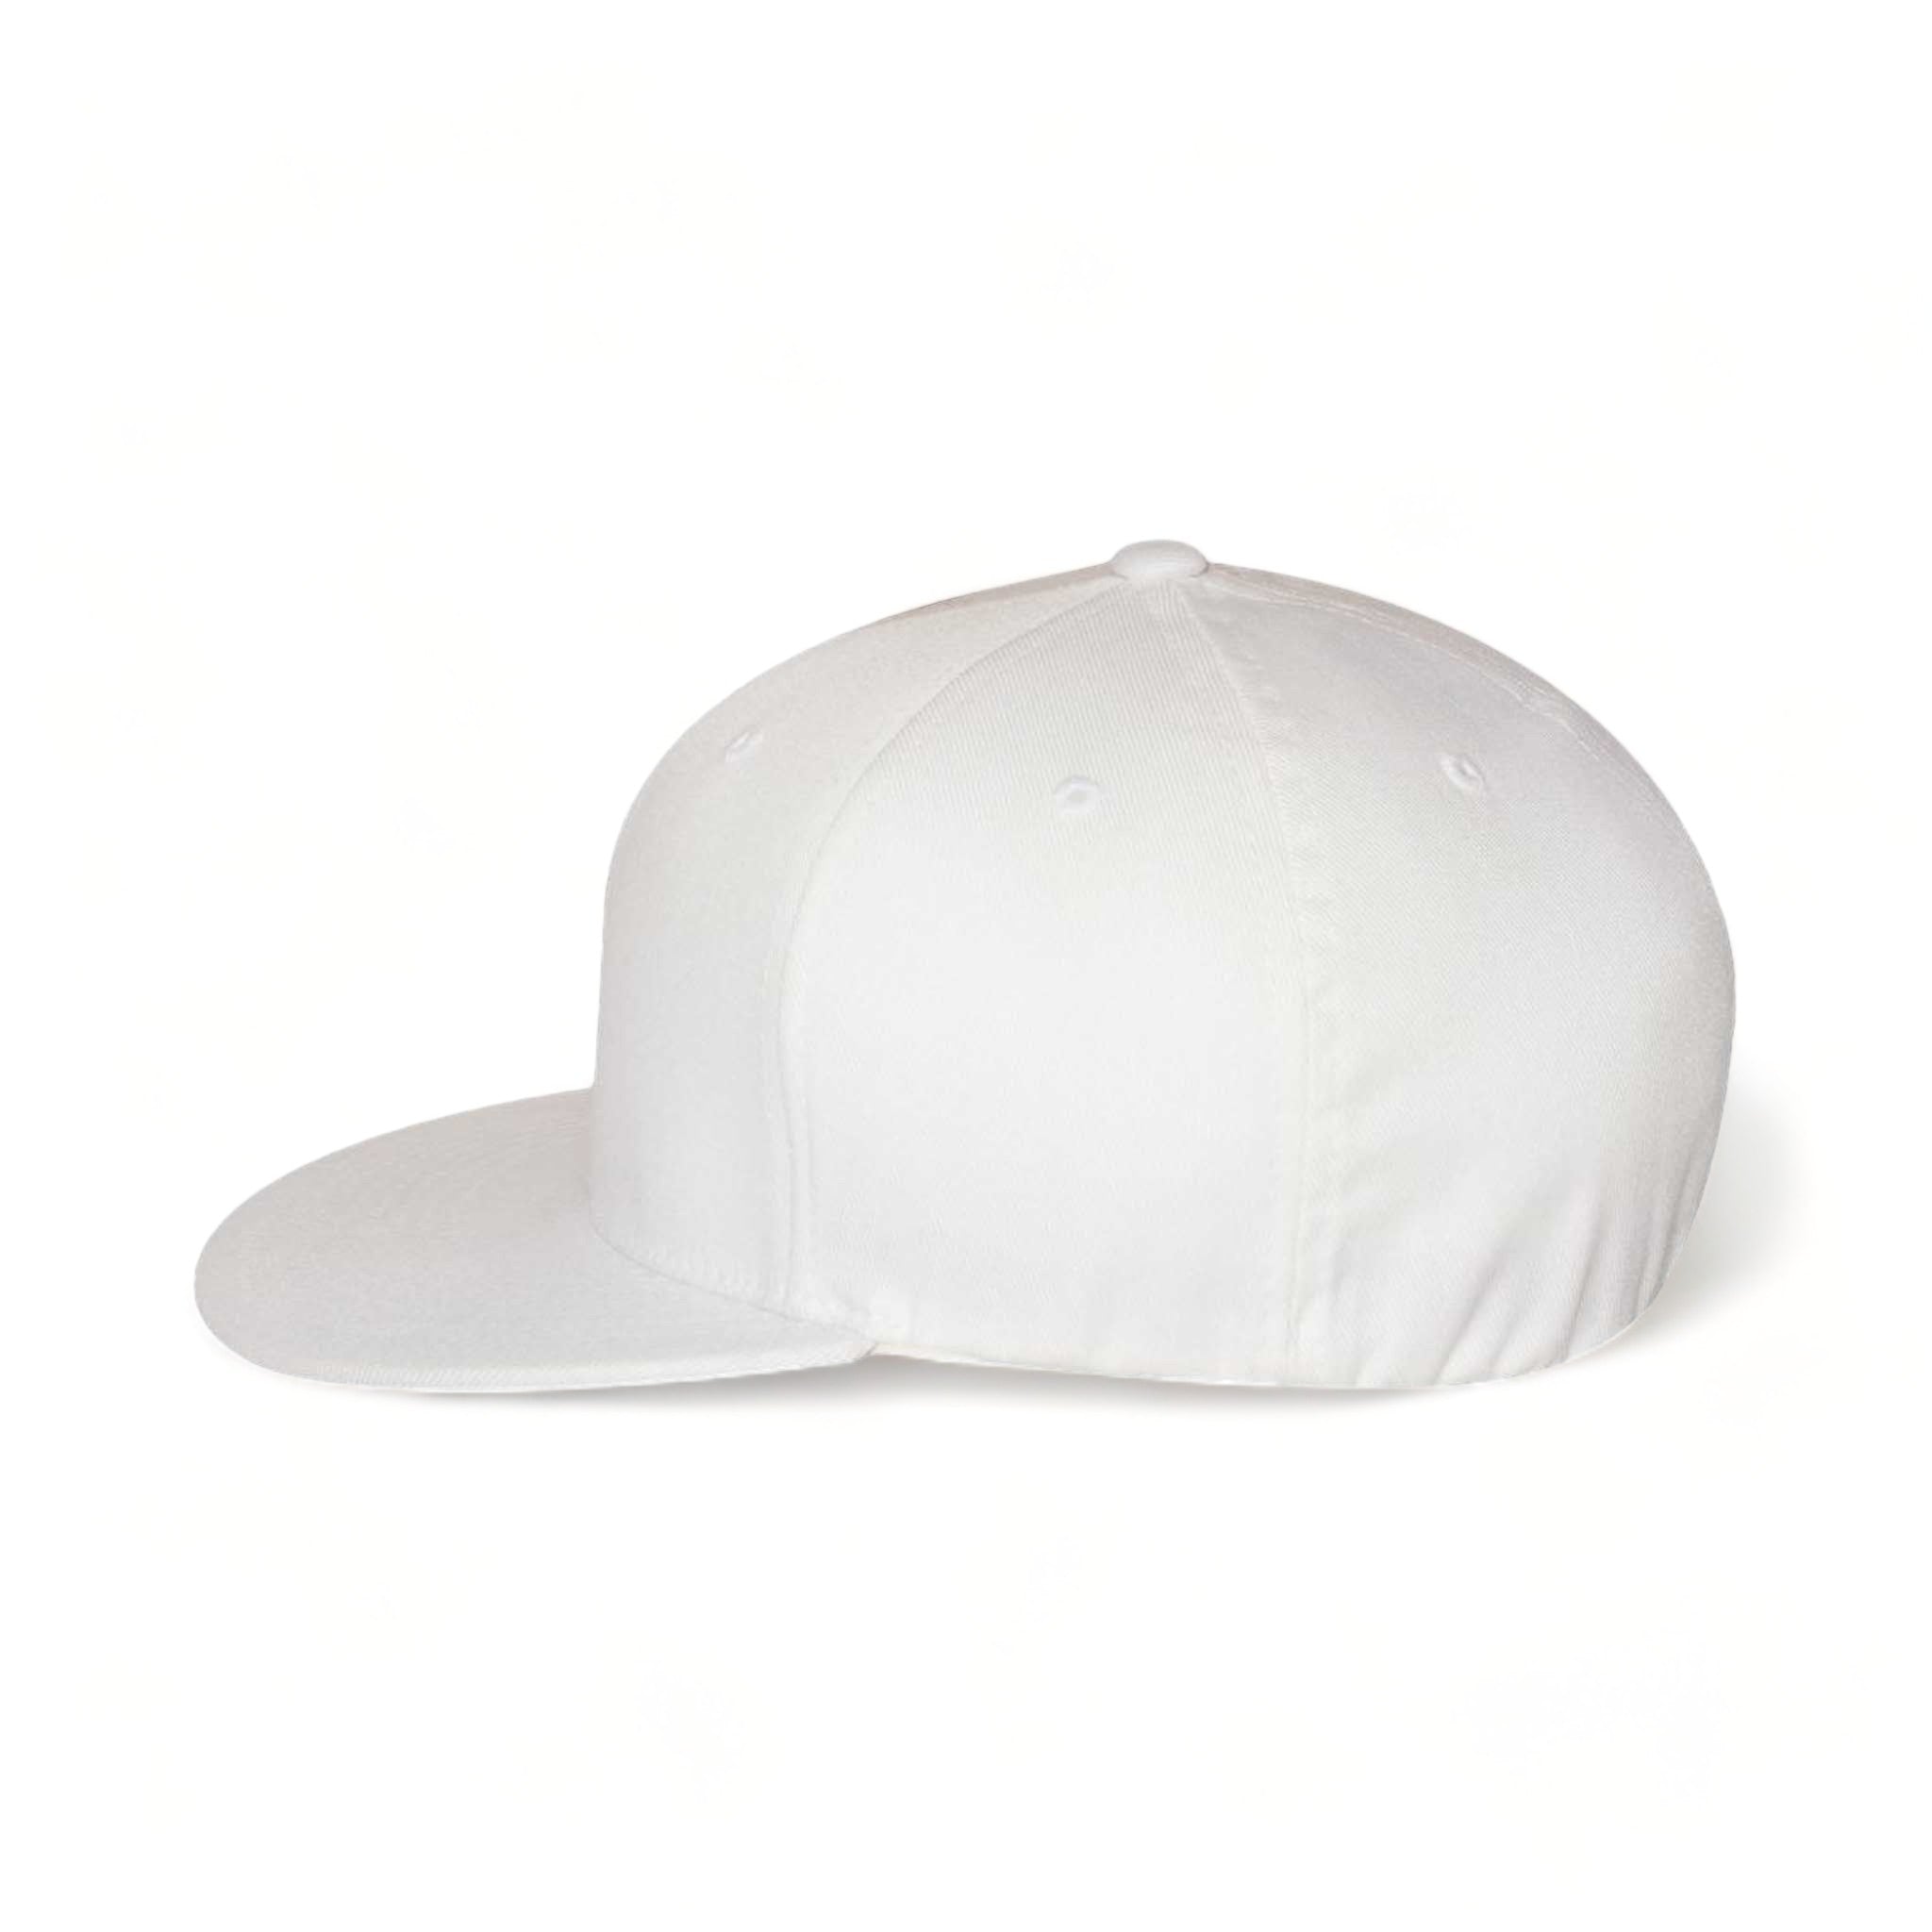 Side view of Flexfit 6297f custom hat in white